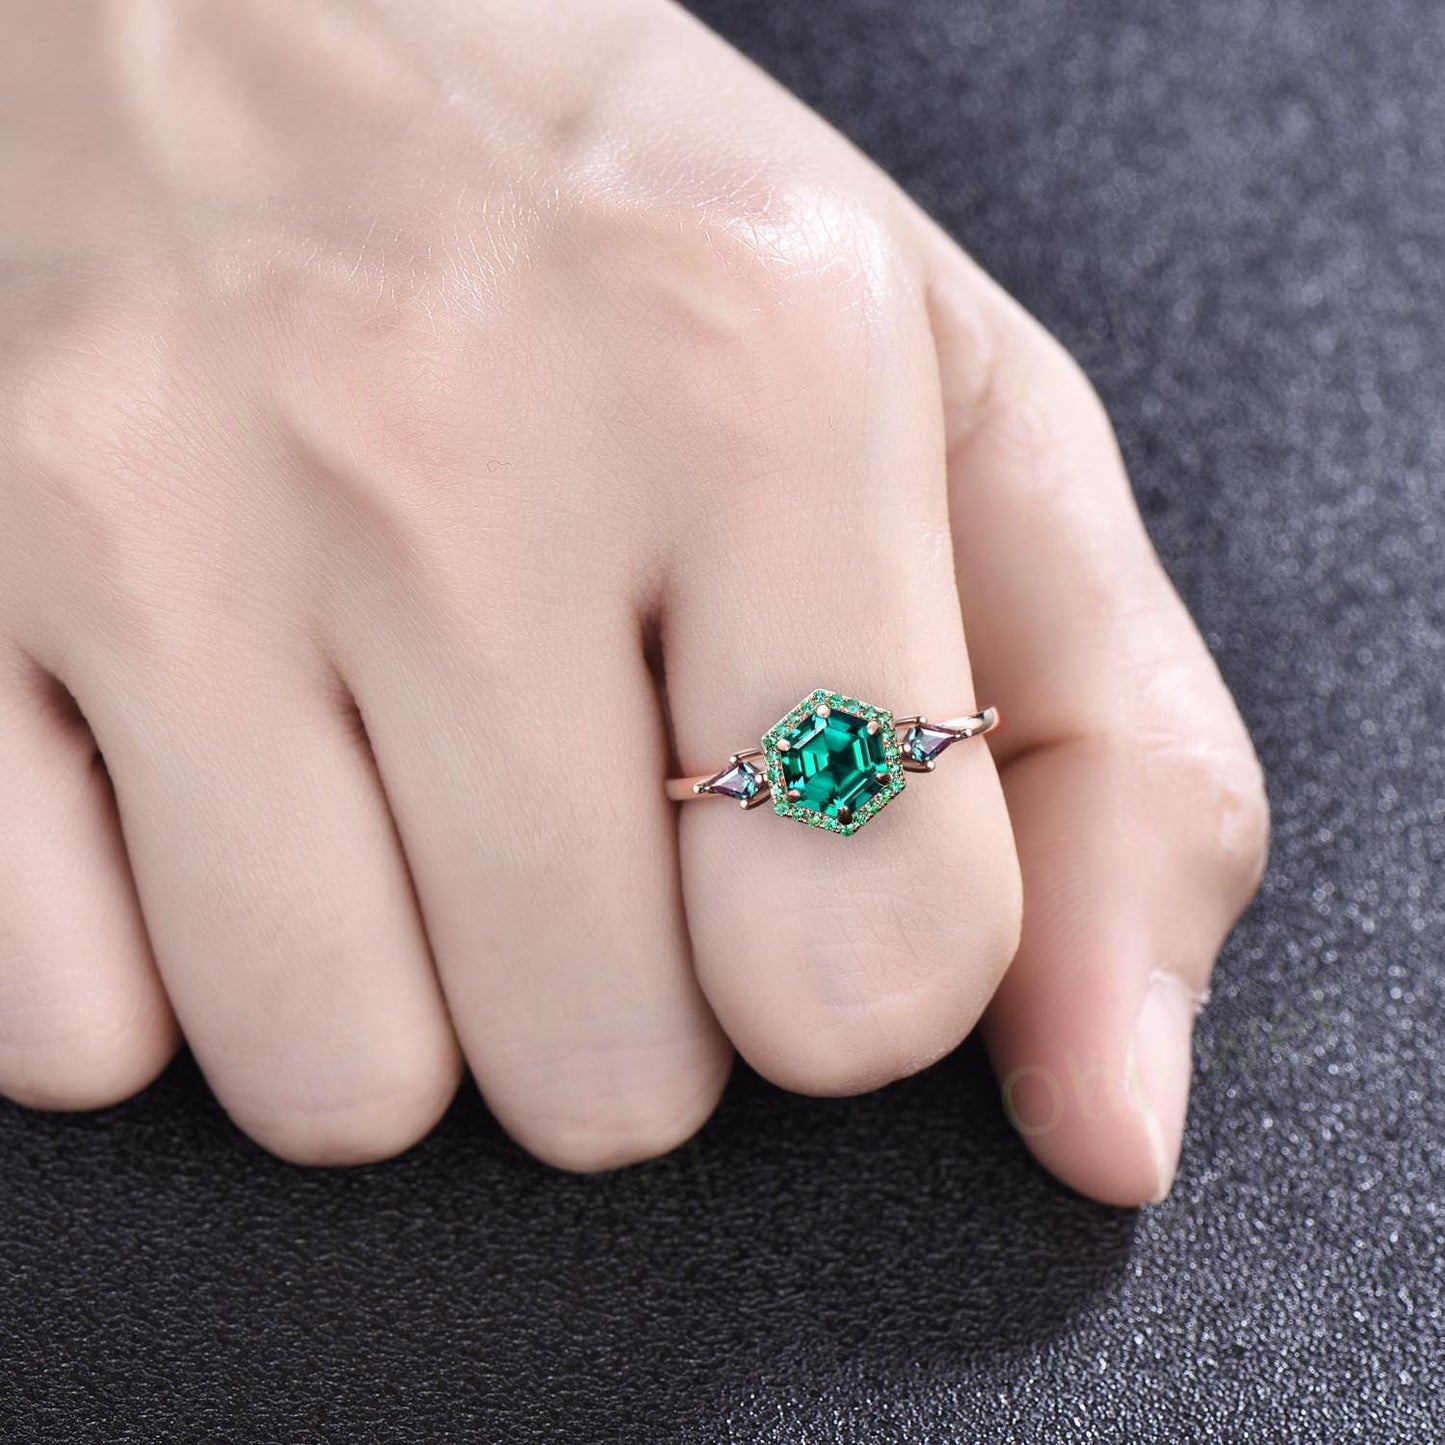 Vintage Hexagon cut green emerald engagement ring yellow gold 6 prong halo ring kite alexandrite ring women gemstone promise ring her gift